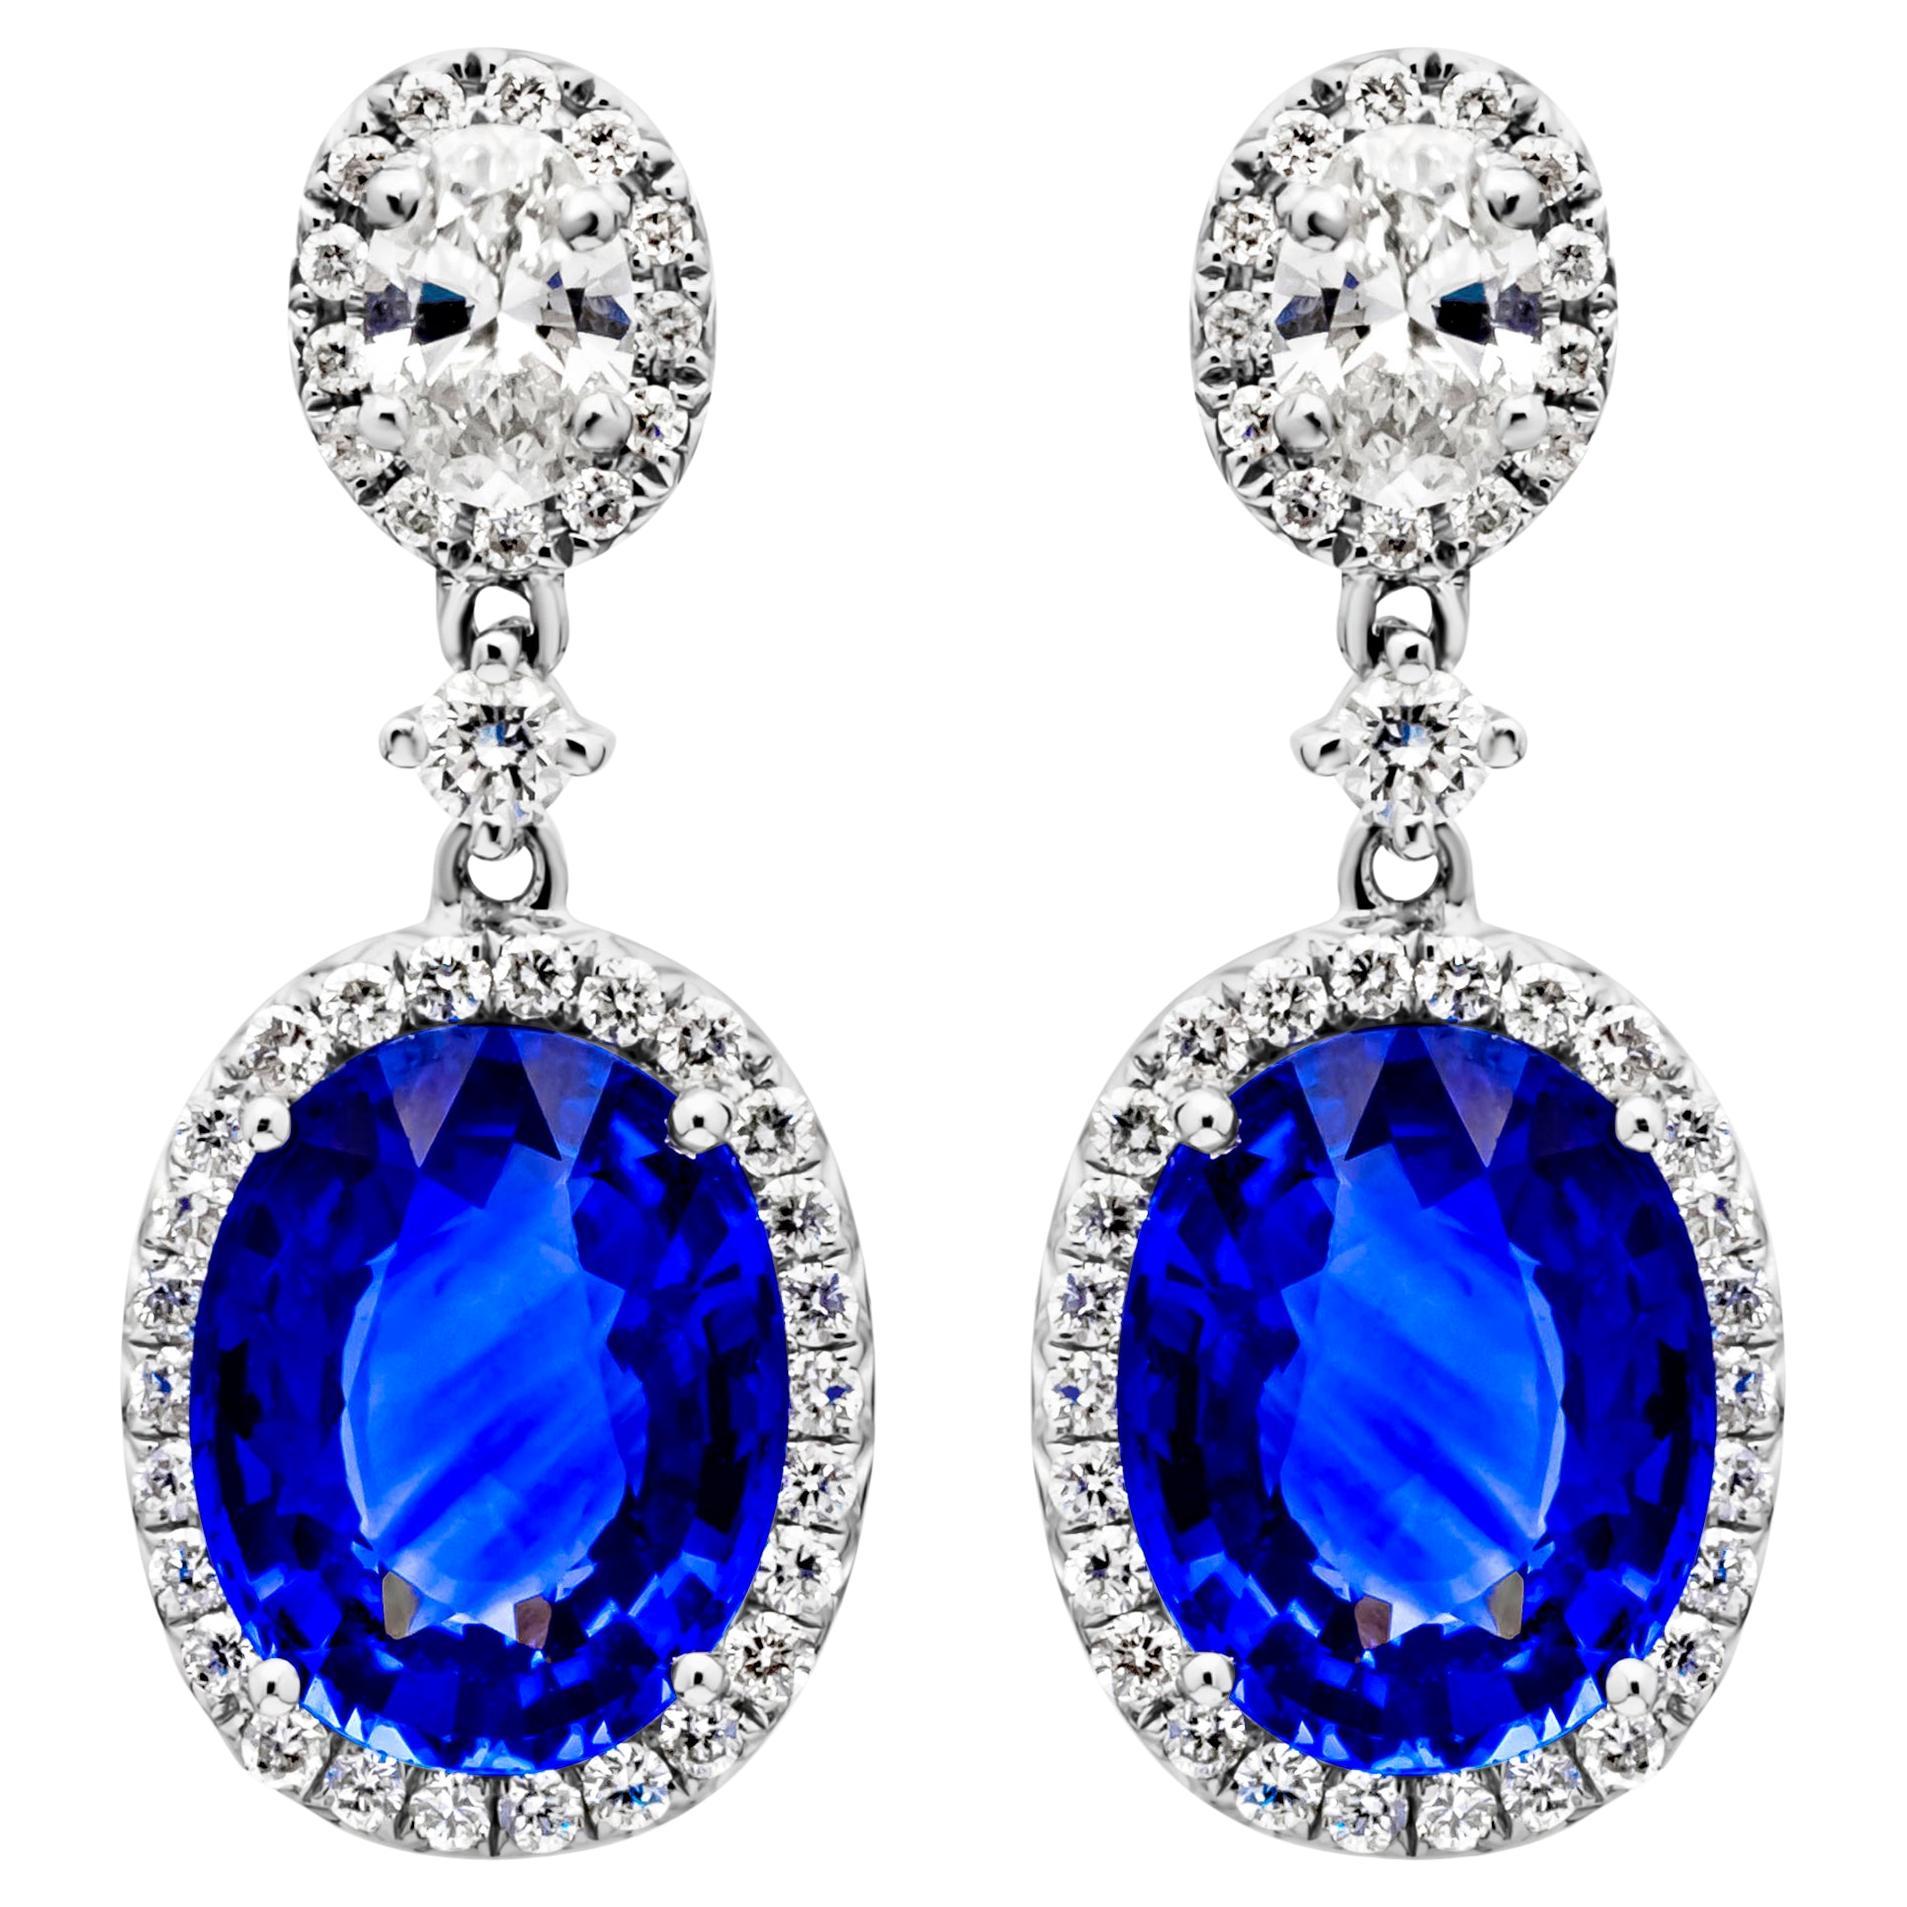 Roman Malakov 4.38 Carats Total Oval Cut Blue Sapphire & Diamond Dangle Earrings For Sale